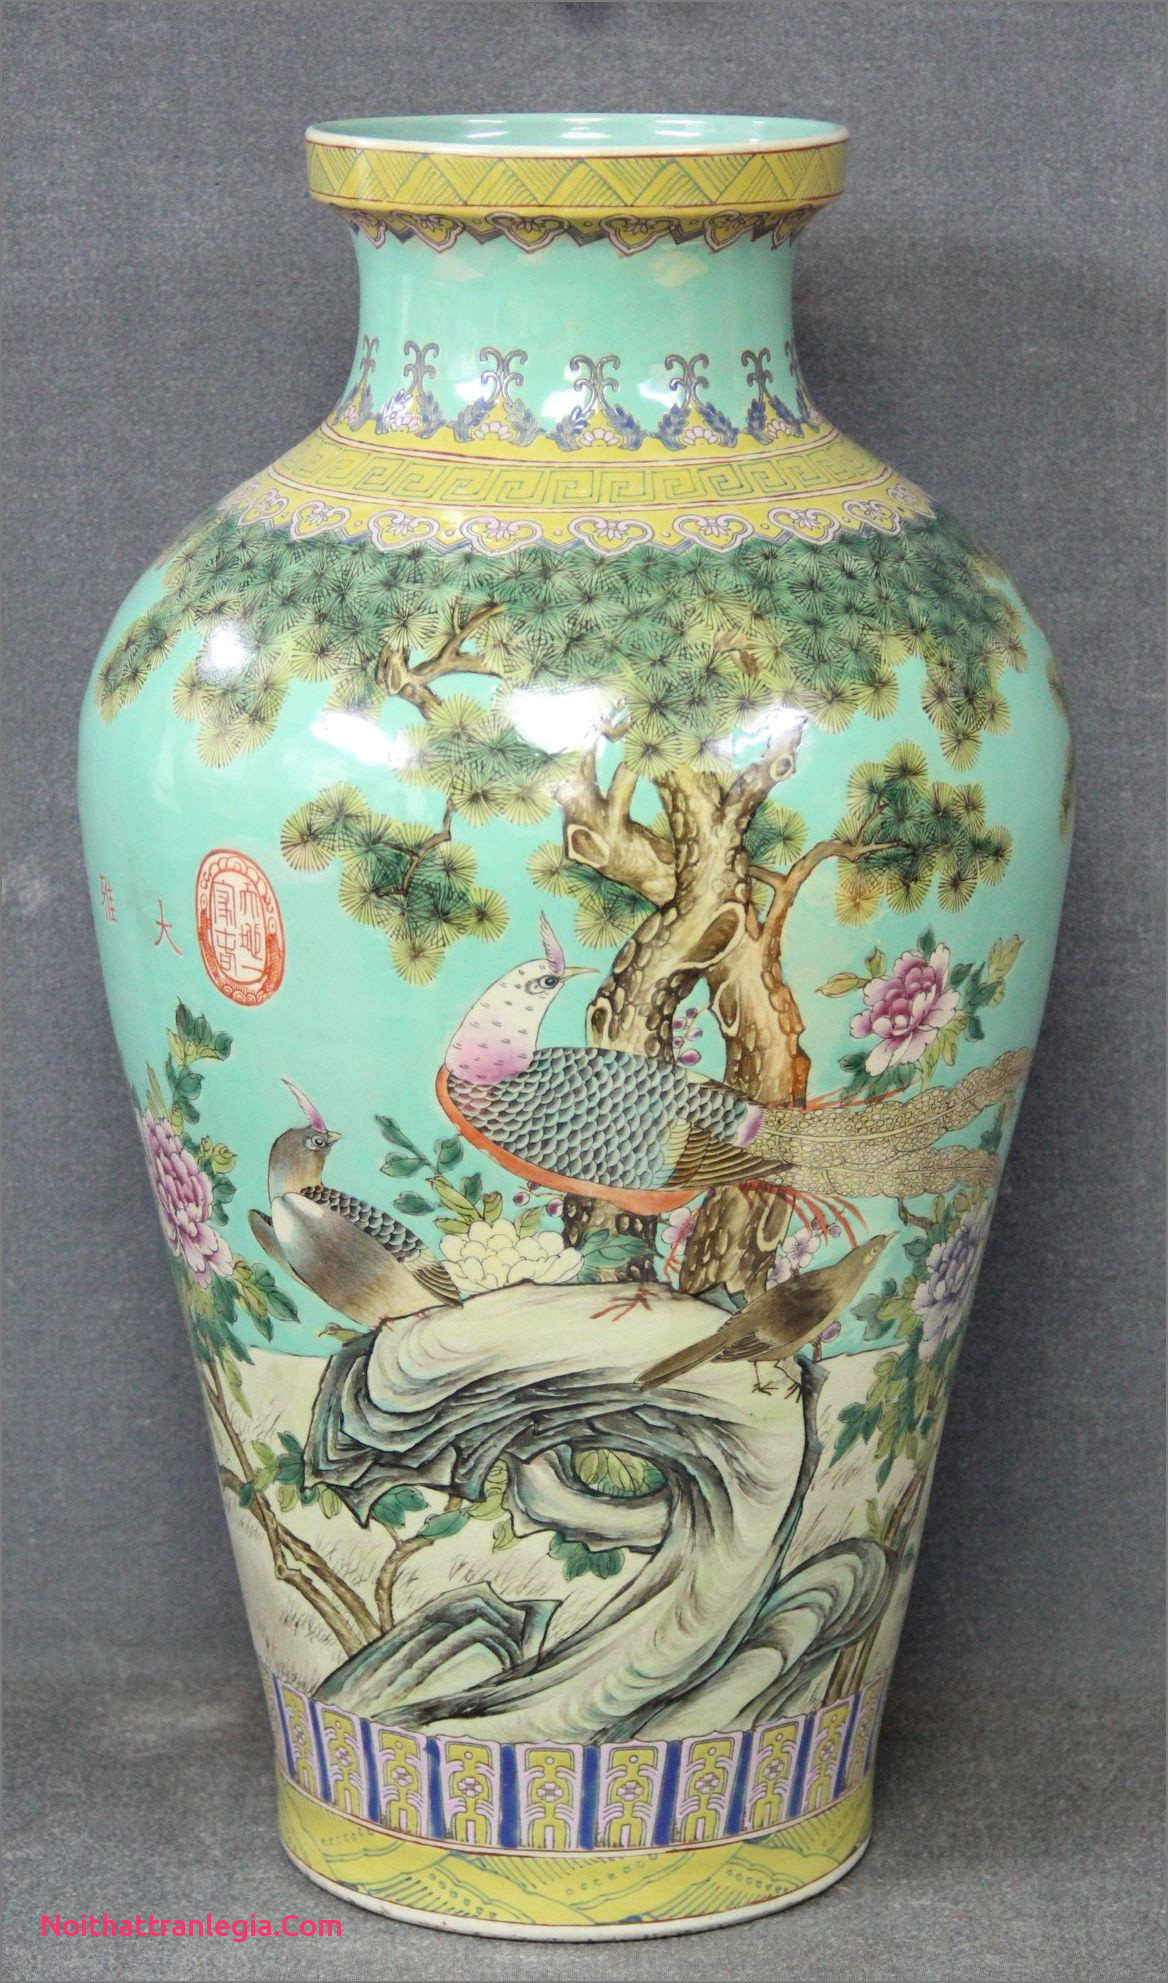 10 Wonderful Vintage Japanese Cloisonne Vase 2024 free download vintage japanese cloisonne vase of 20 chinese antique vase noithattranlegia vases design for antique vase